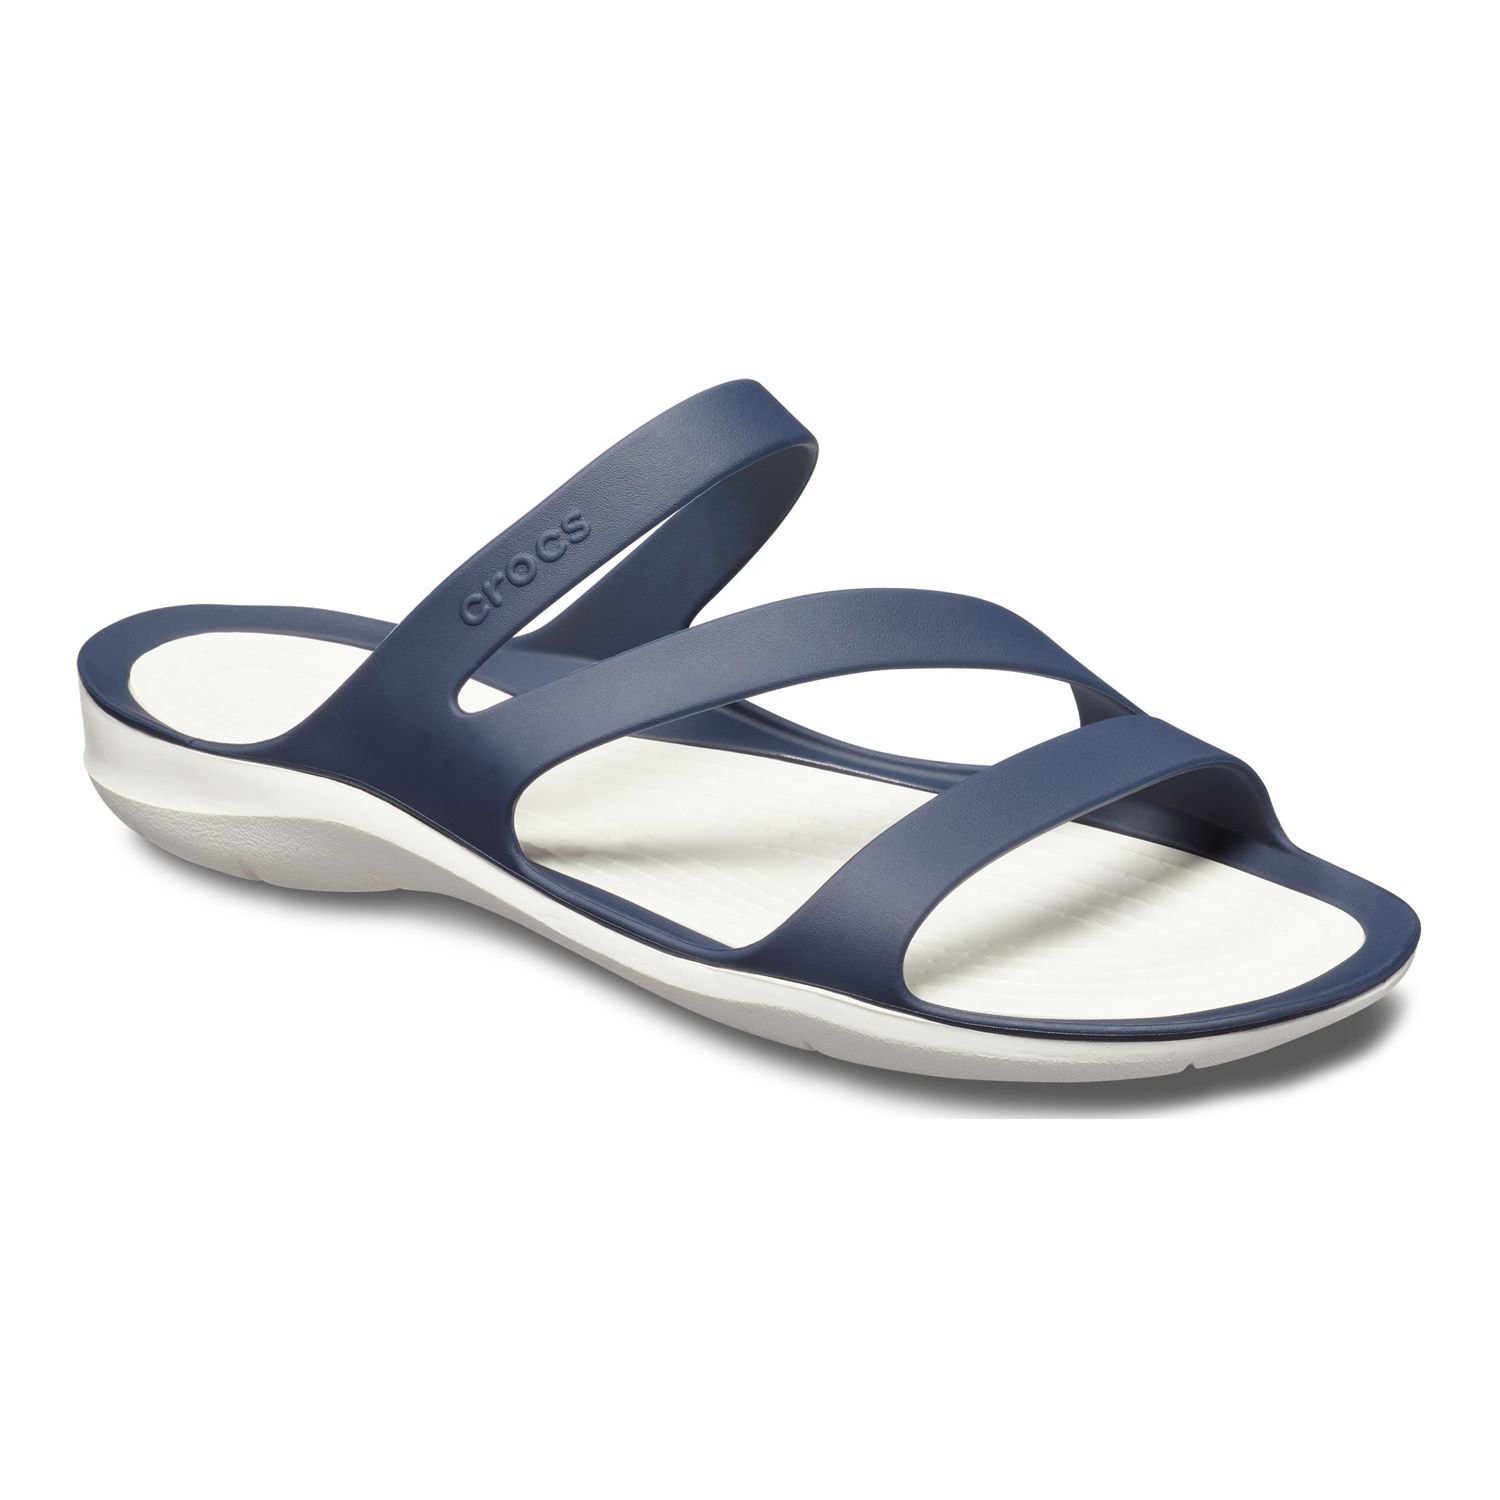 croc swiftwater sandals